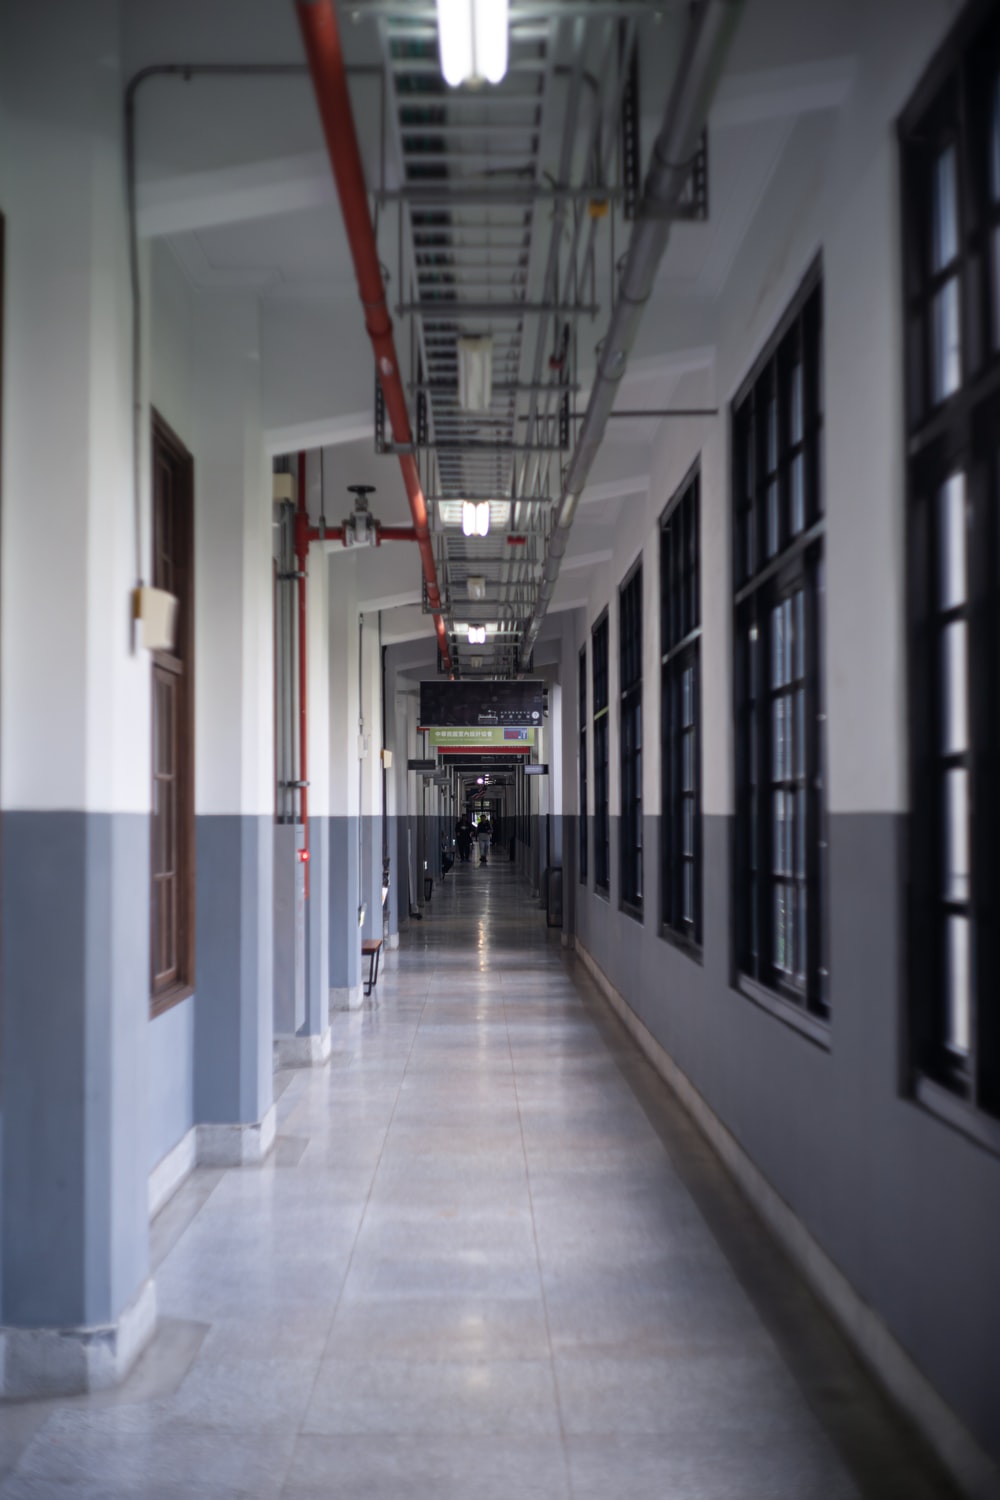 School Hallway Picture. Download Free Image